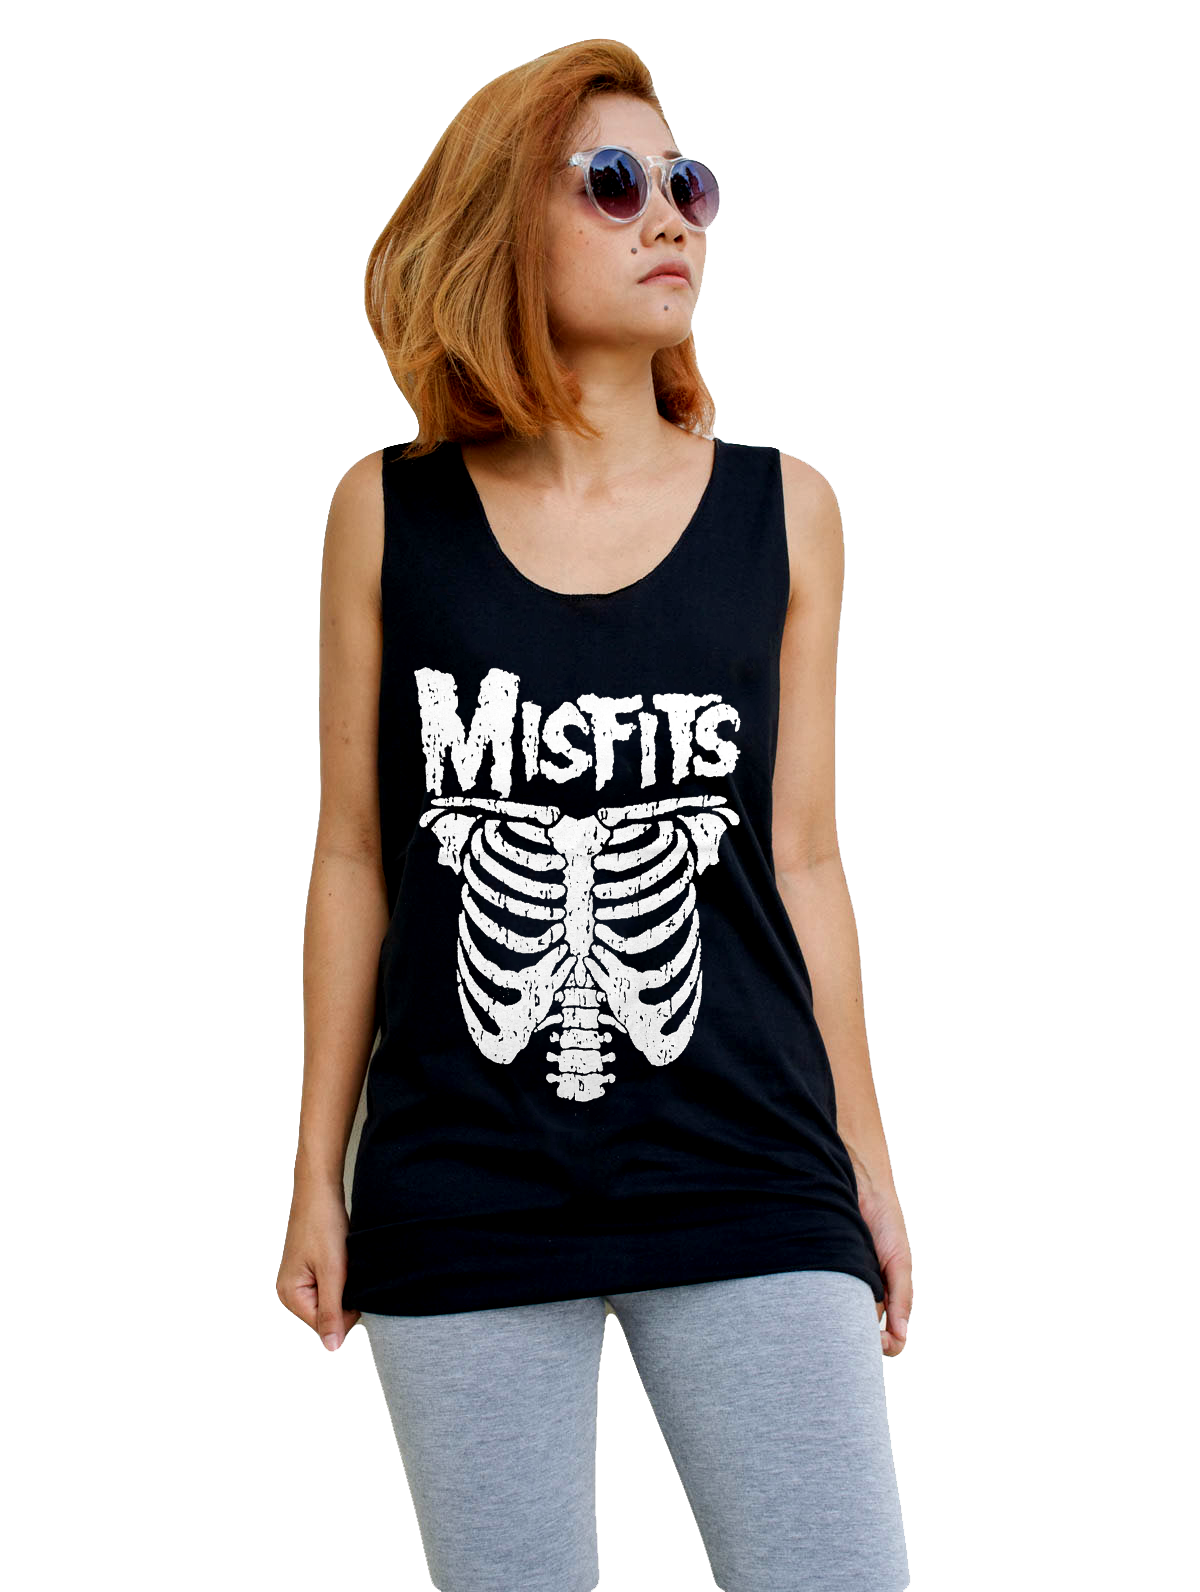 Unisex Misfits Tank-Top Singlet vest Sleeveless T-shirt